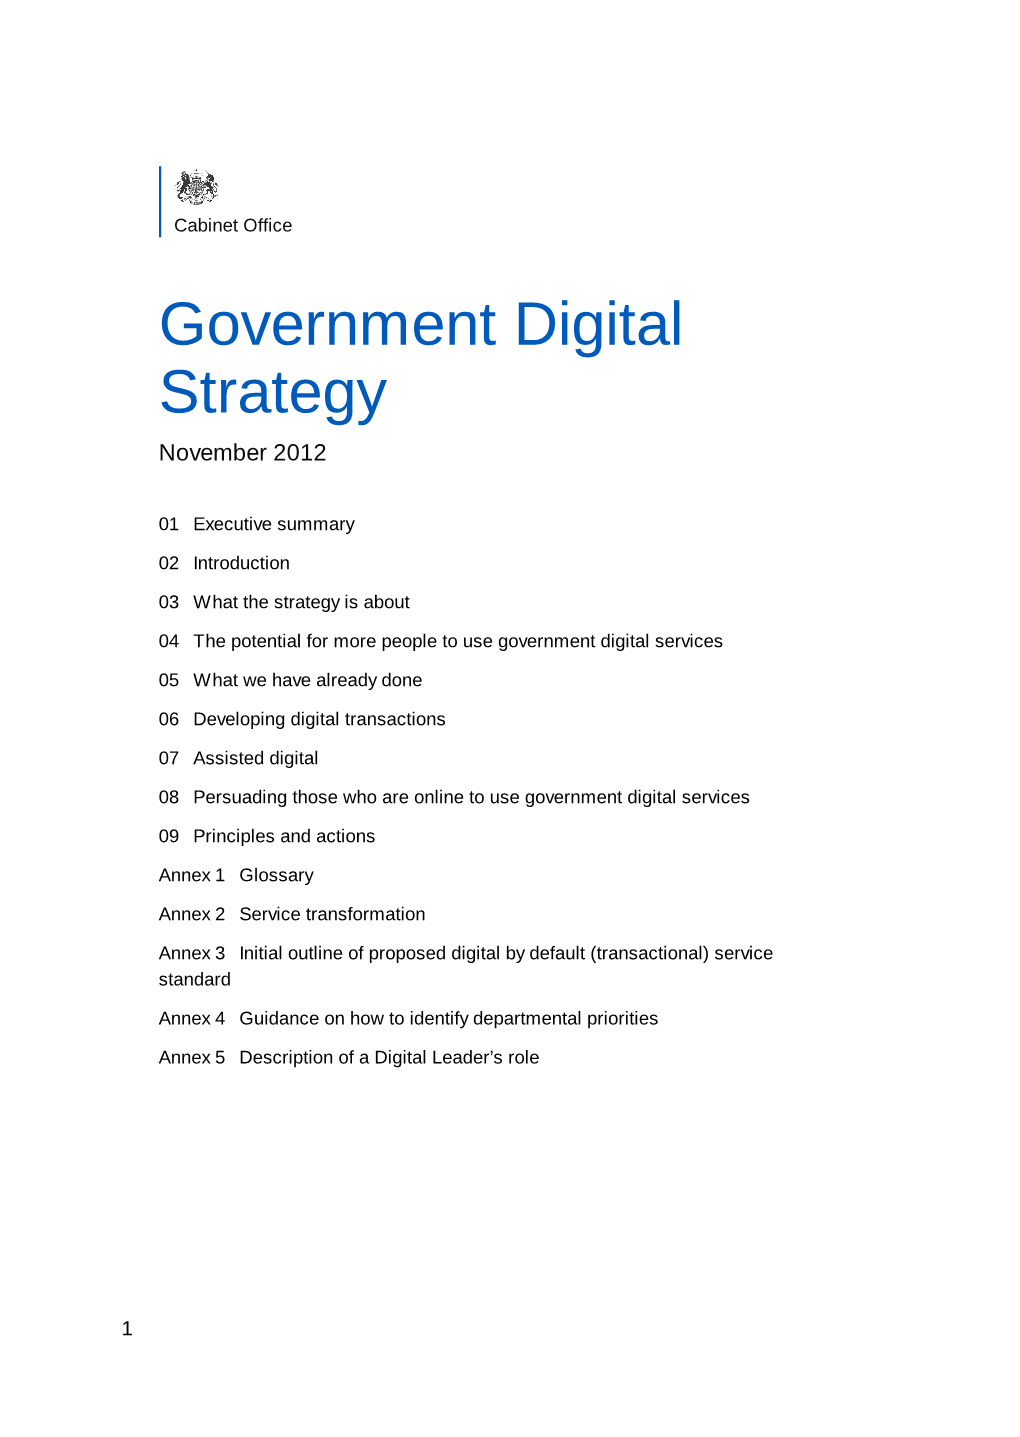 Government Digital Strategy November 2012